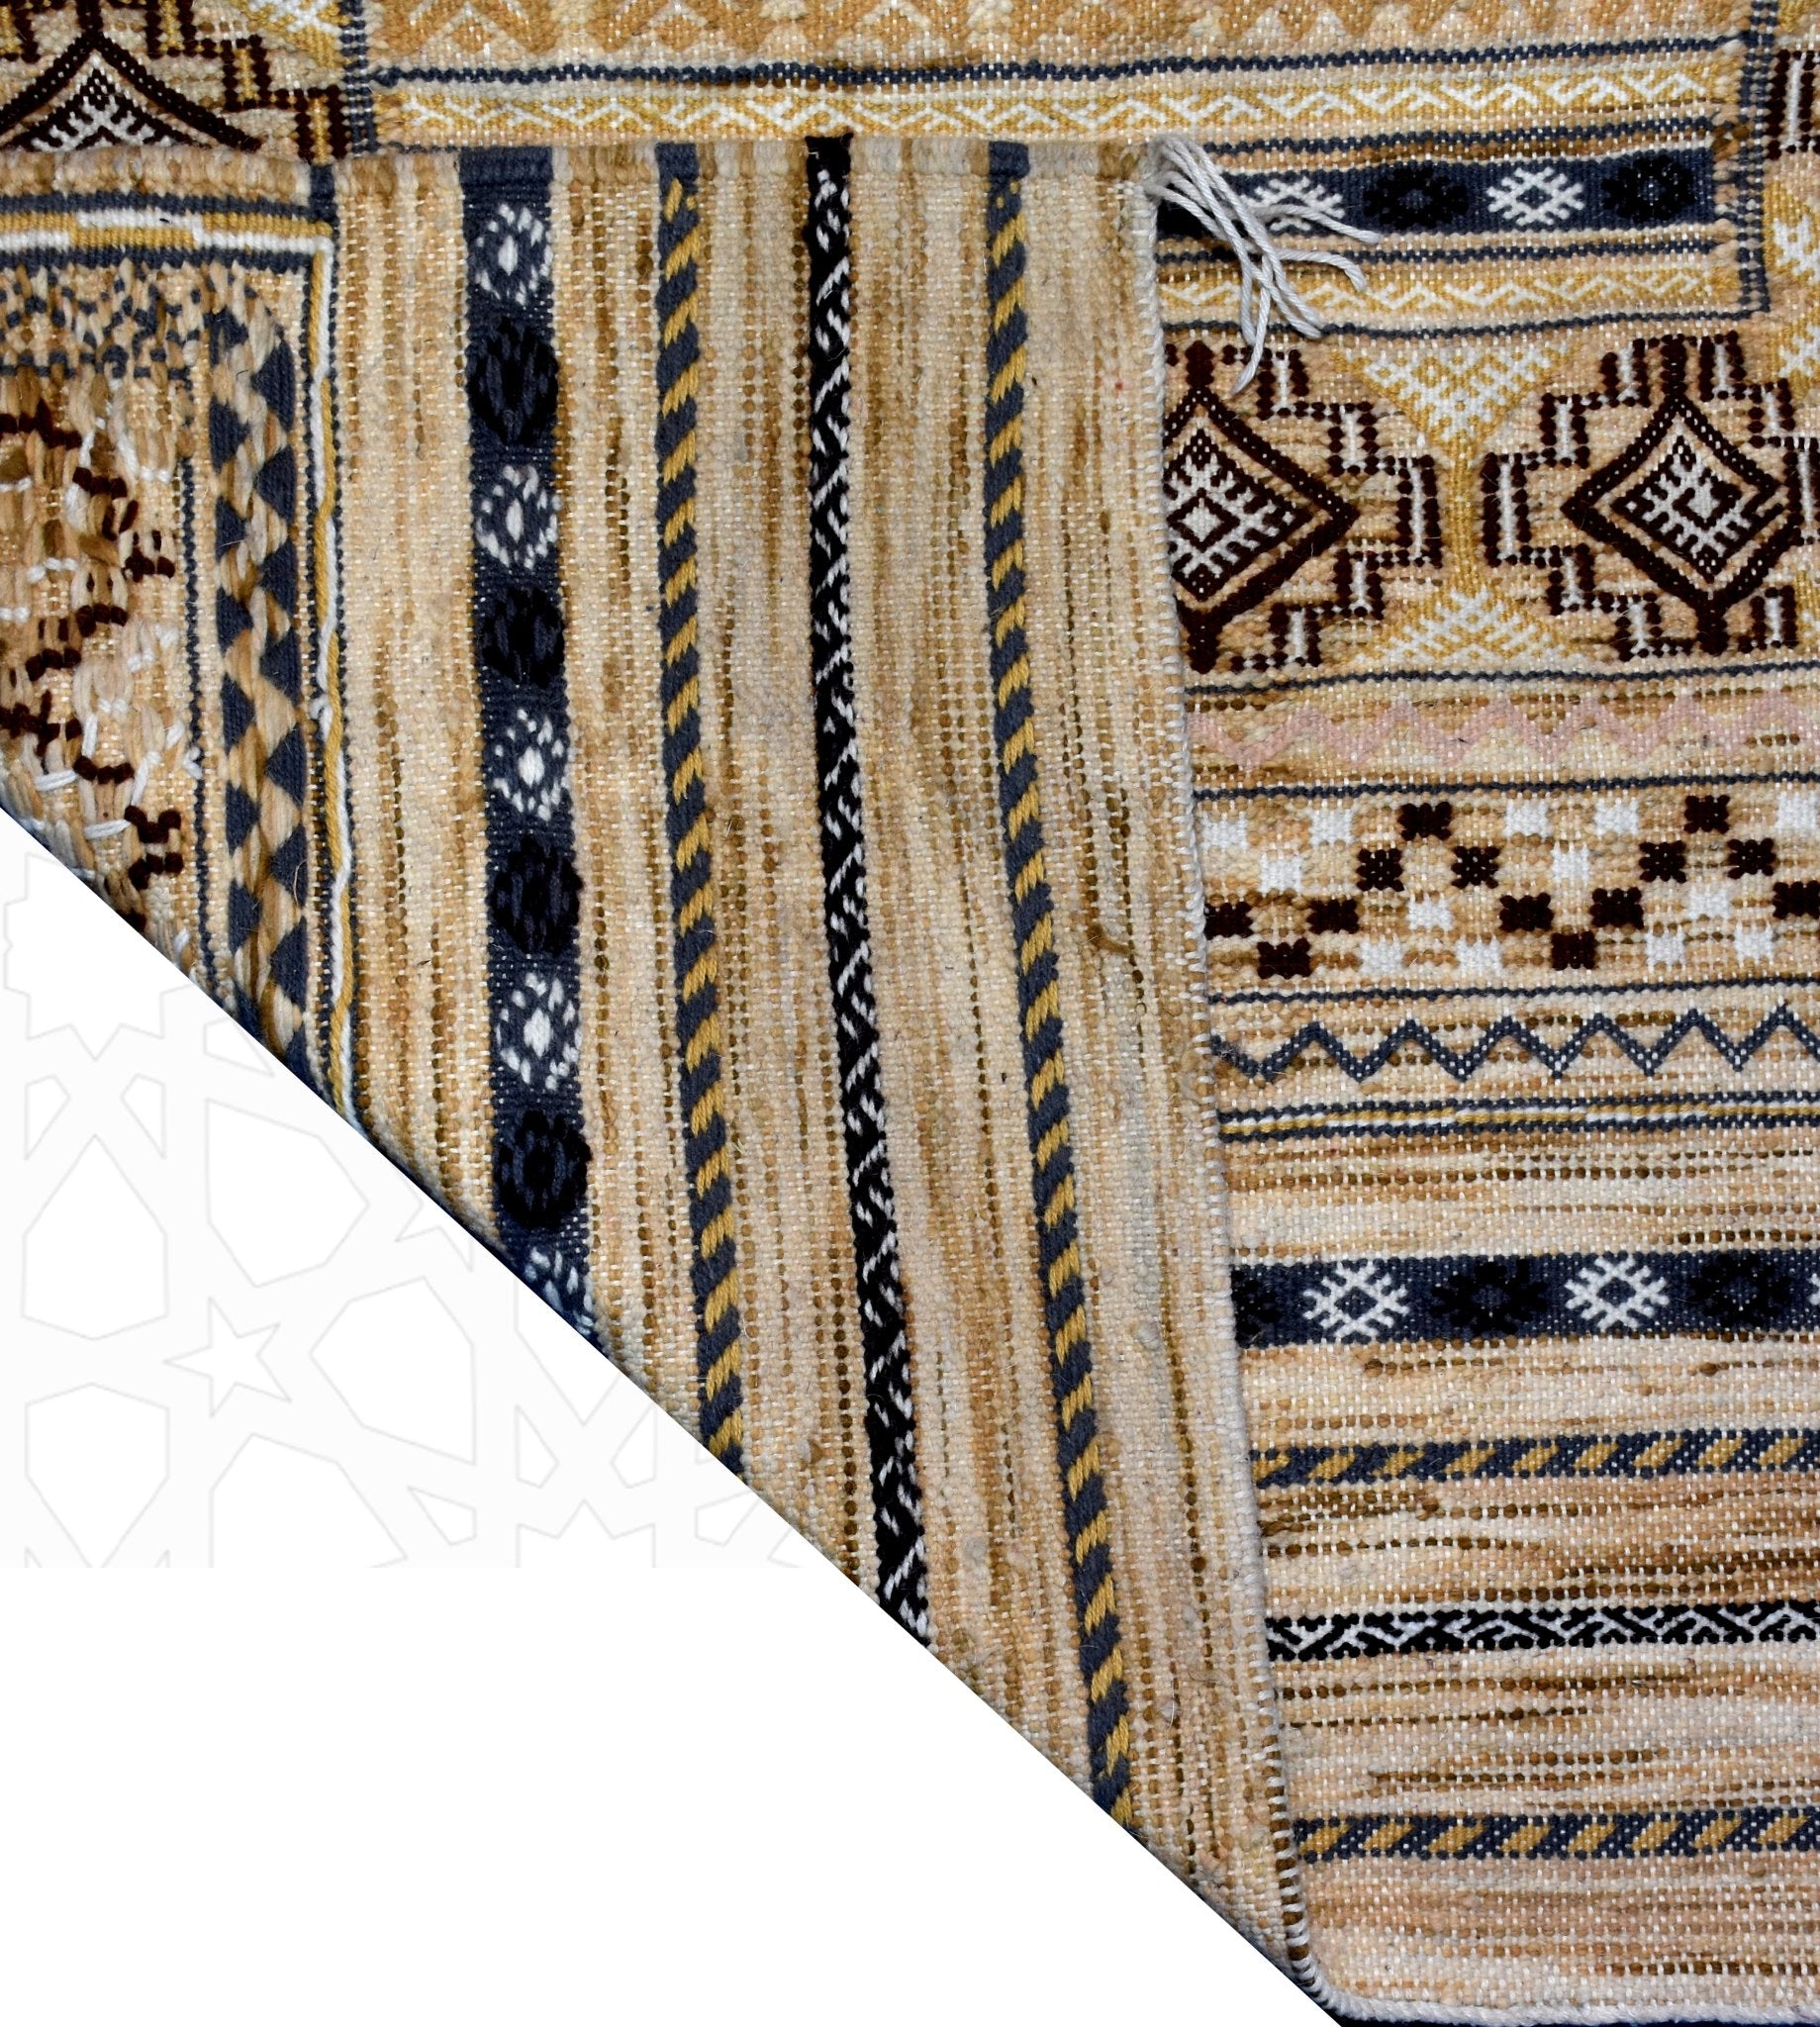 Flatweave kilim hanbal Moroccan rug - 3.94 x 6.57 ft / 120 x 200 cm - Berbers Market